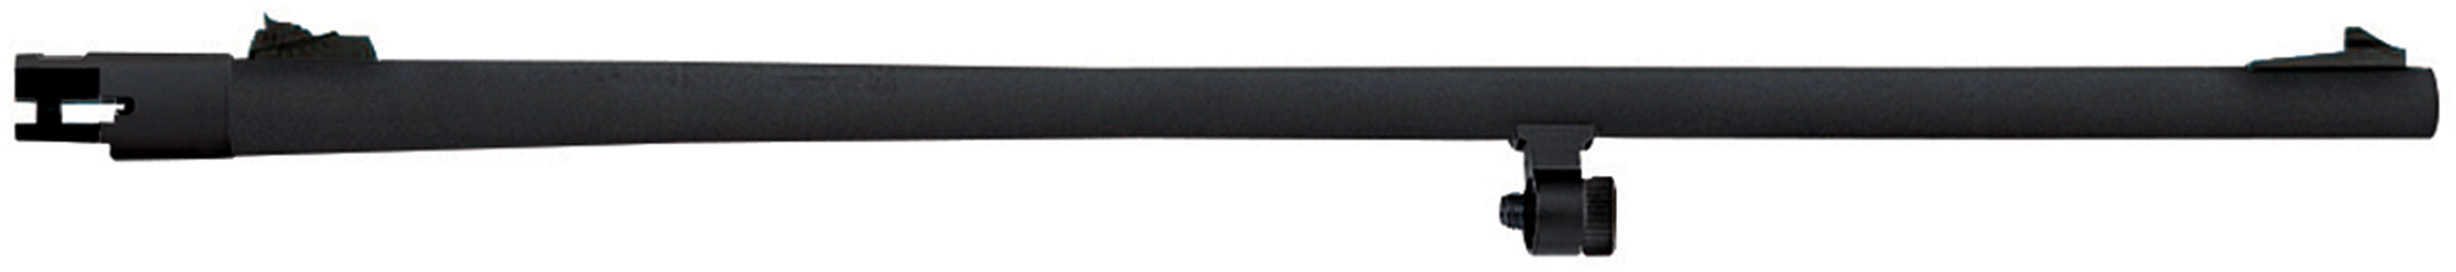 Mossberg 500 Slug Barrel 20 ga. 24 in. Rifle Sights Fully Rifled Matte Blue Model: 90059